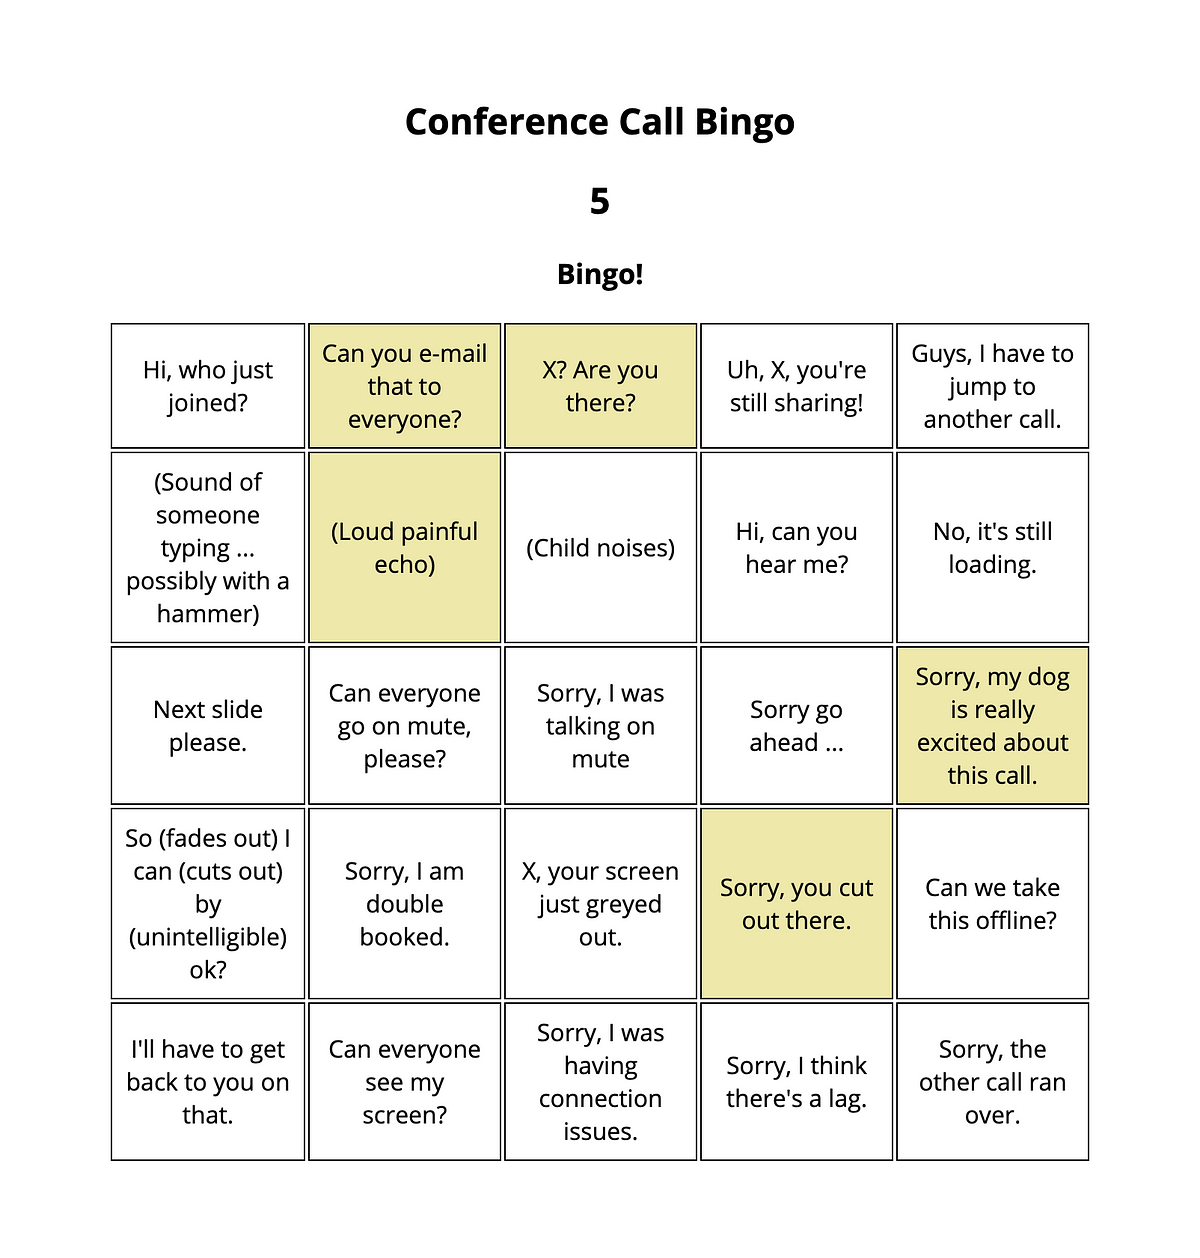 Conference Call Bingo, functional and imperative | by Mattia Richetto ...